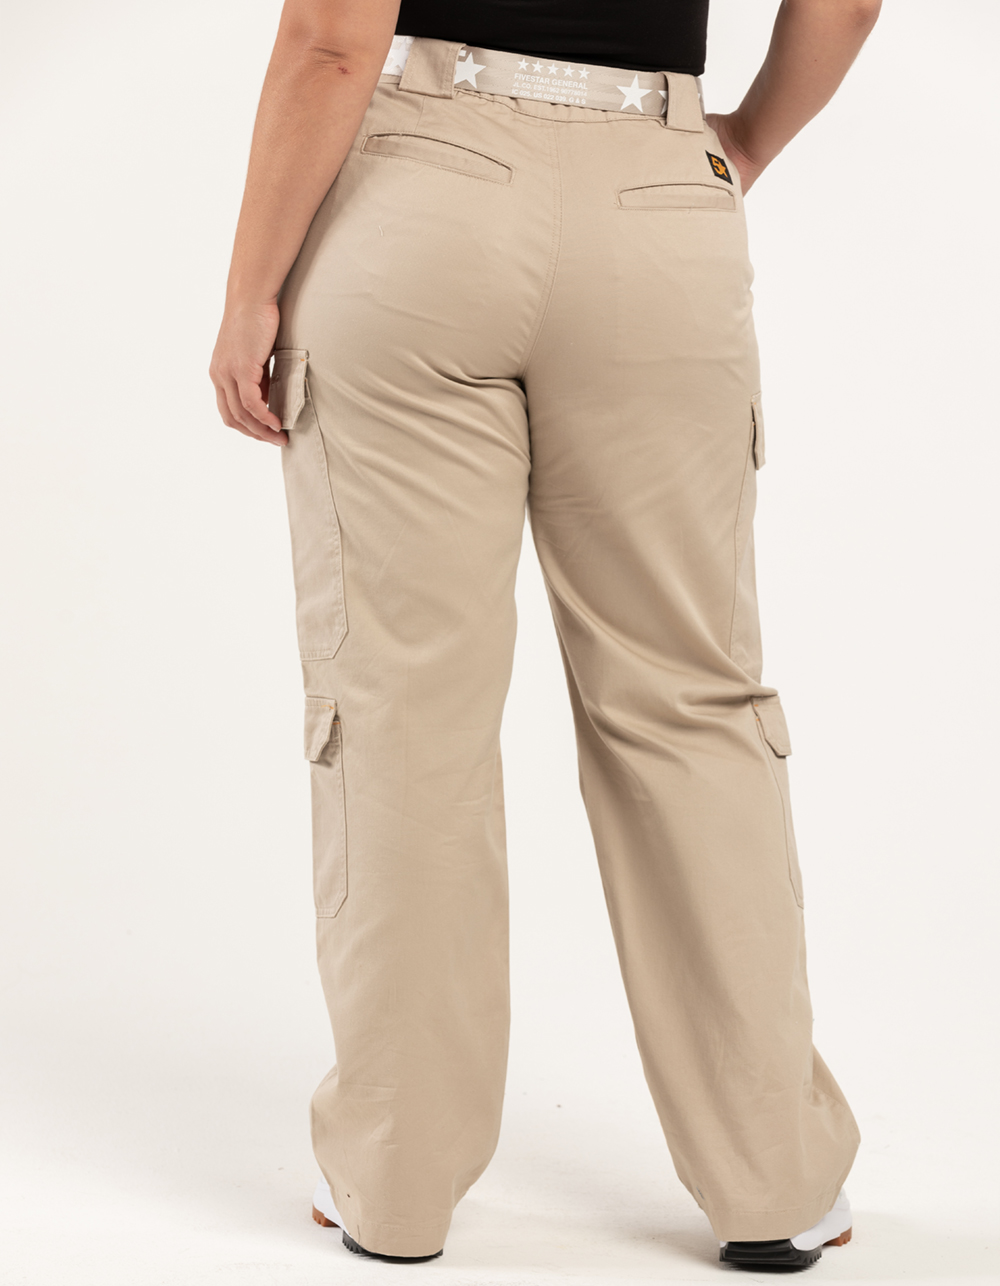 Women's Standard Cargo Pants